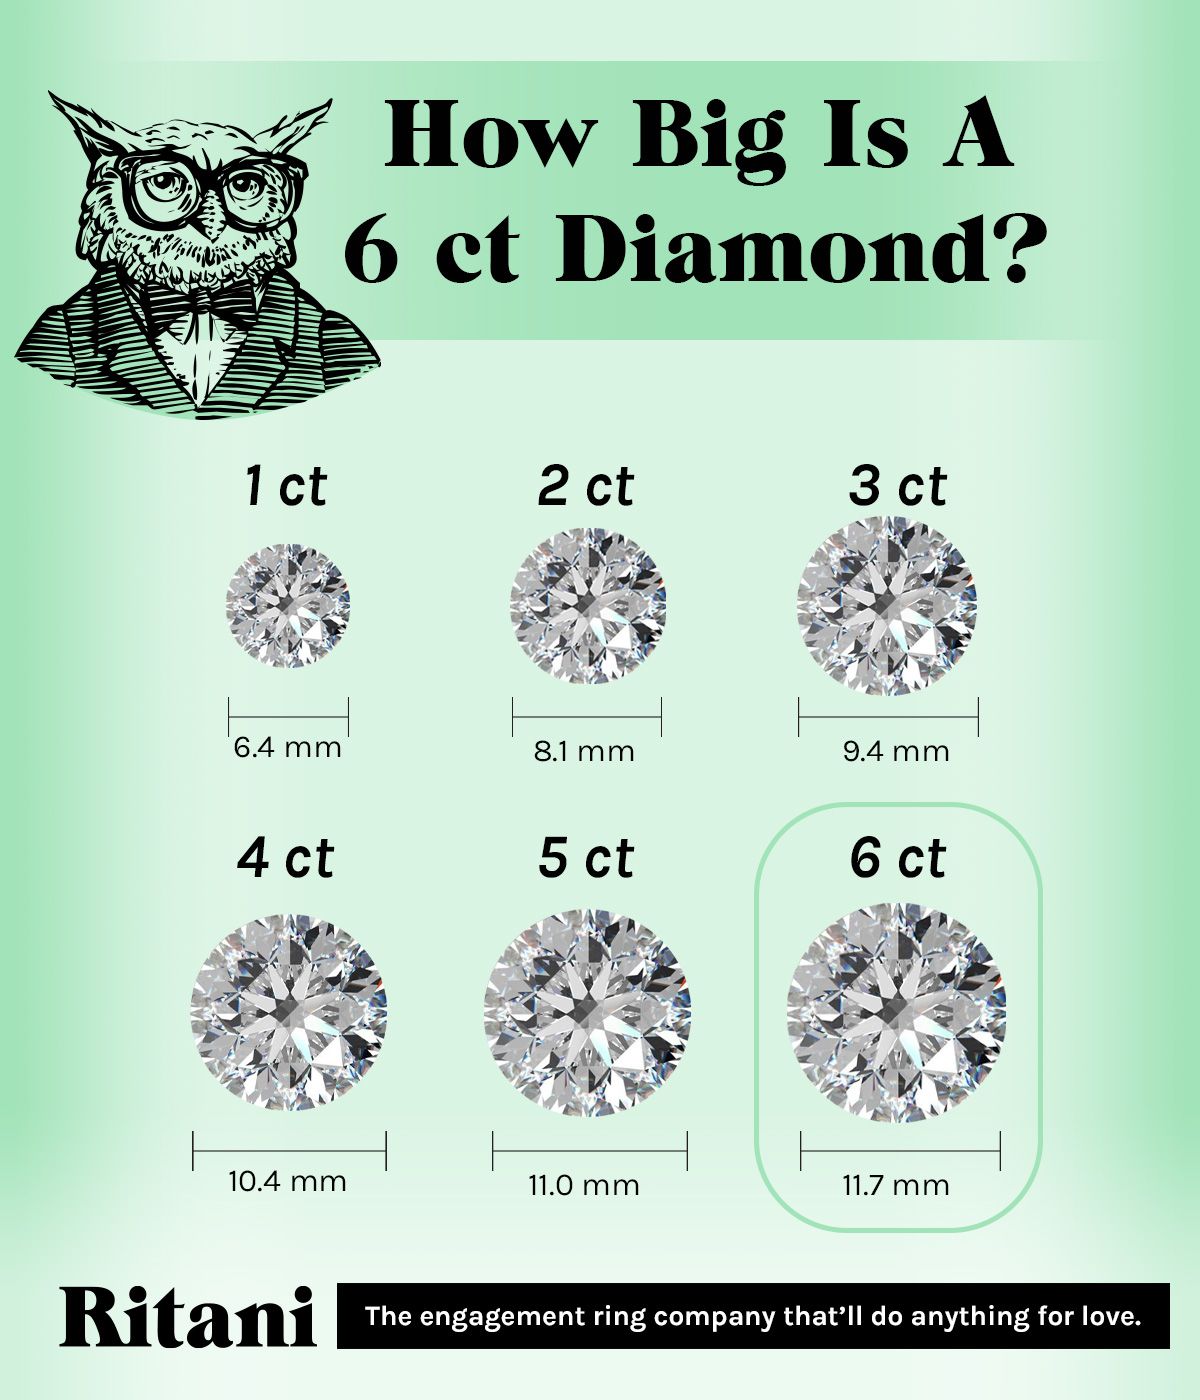 how big is a 6 carat diamond?